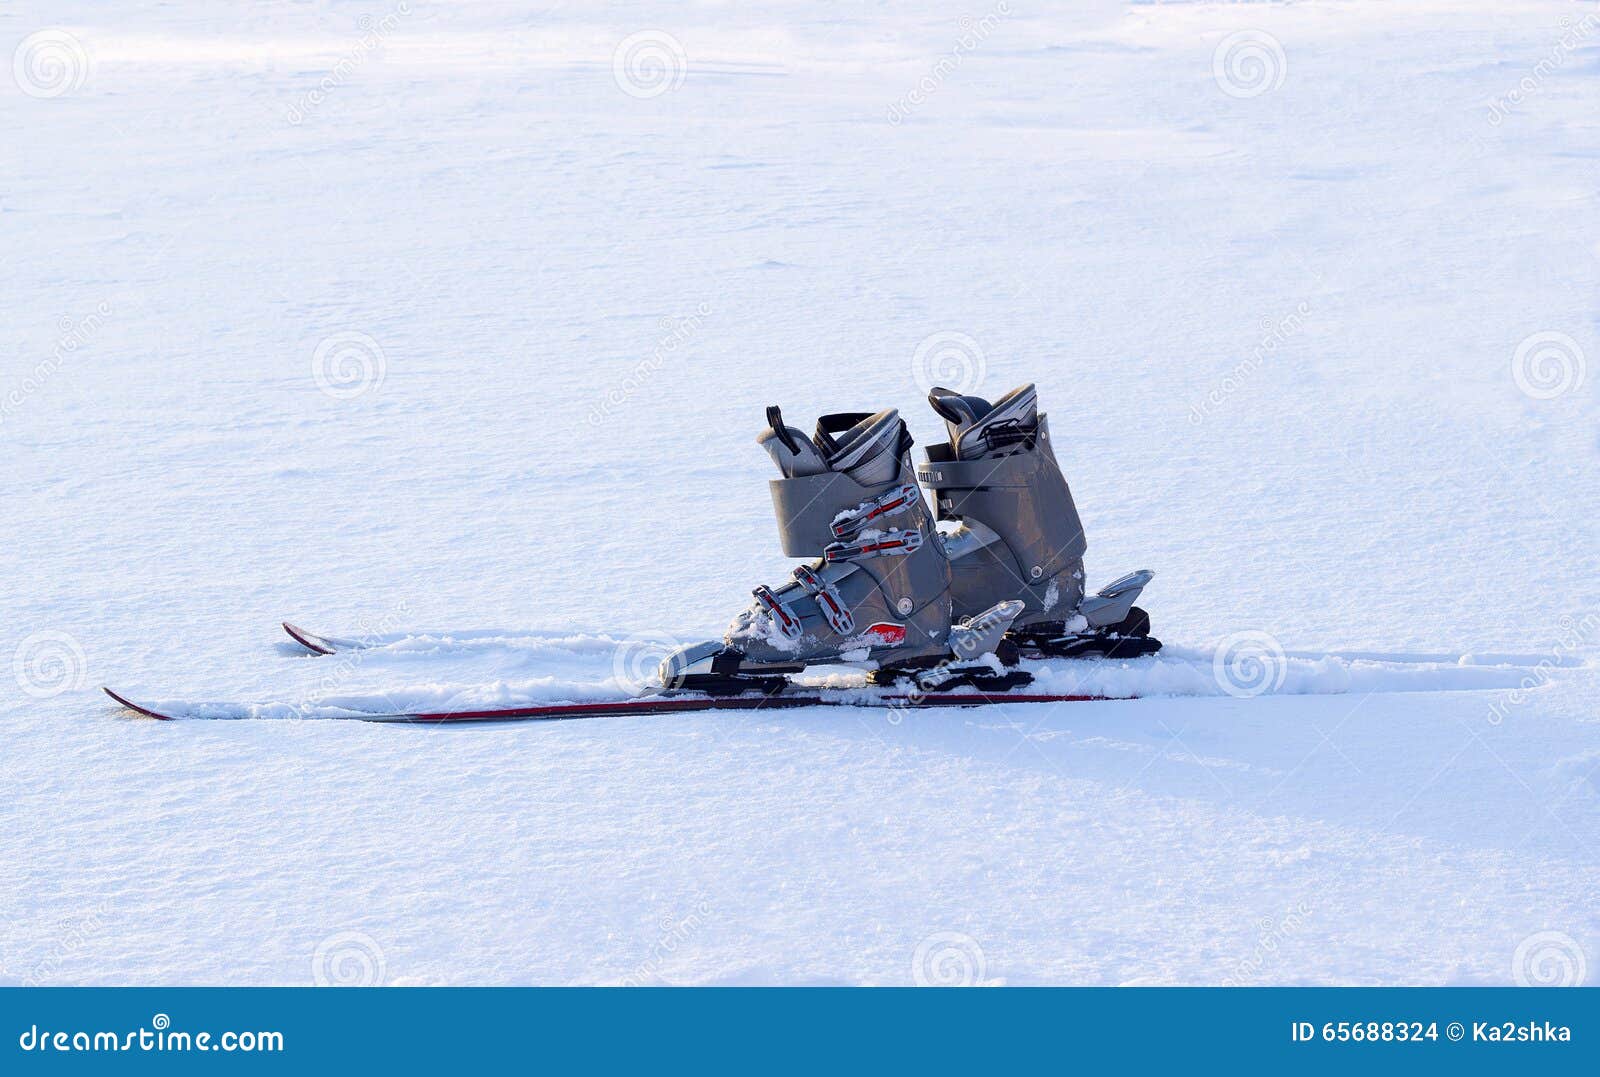 Skiing Equipment Snow White Day 65688324 